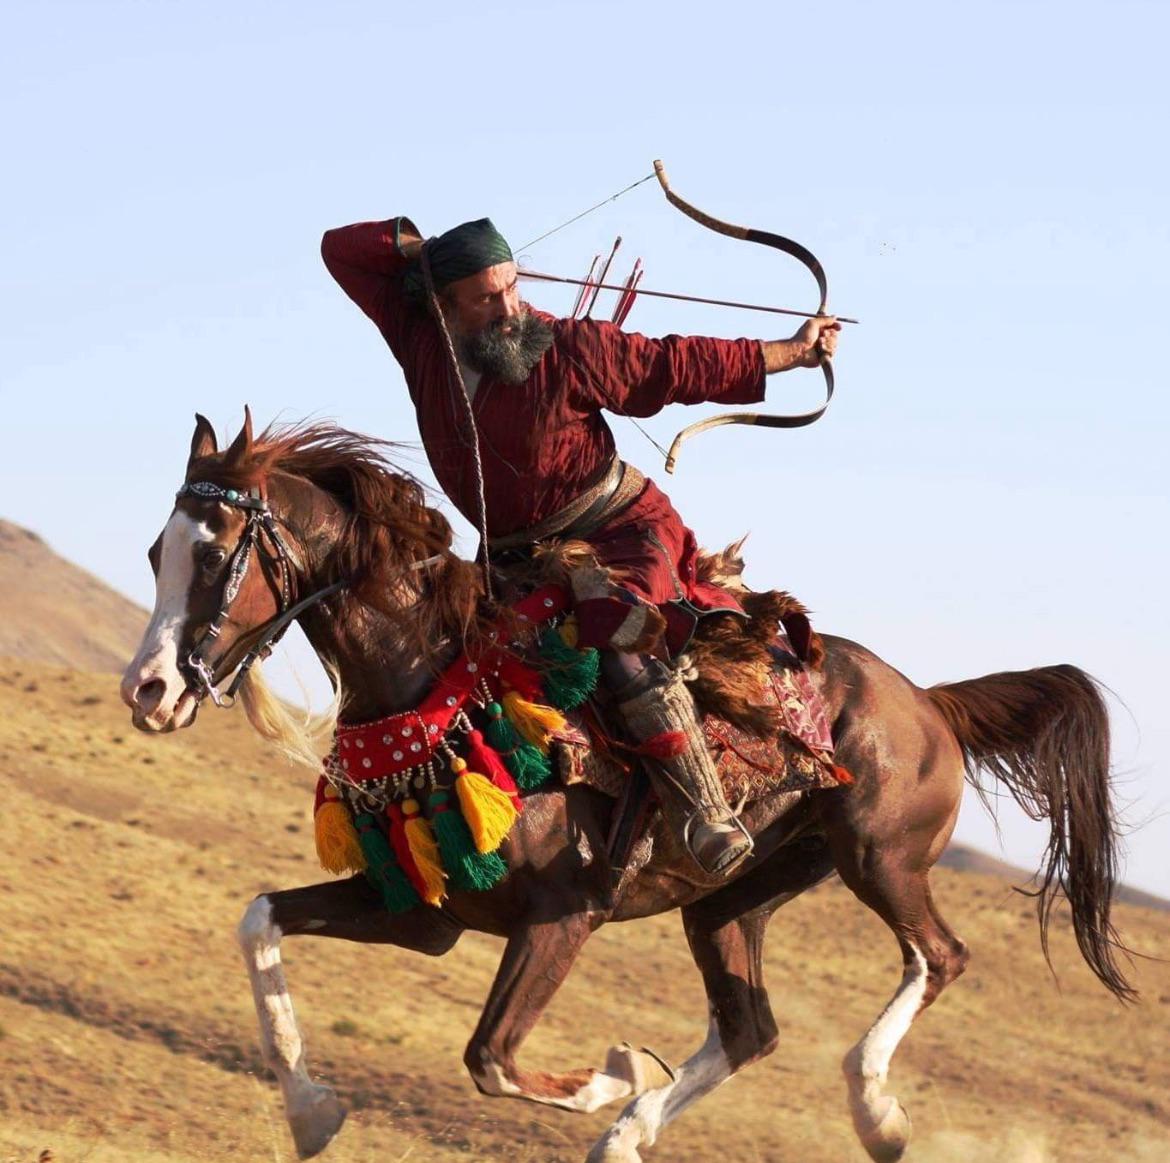 Ali Ghoorchian, an Iranian world-champion horseback archer, performs the famous Parthian shot.jpeg